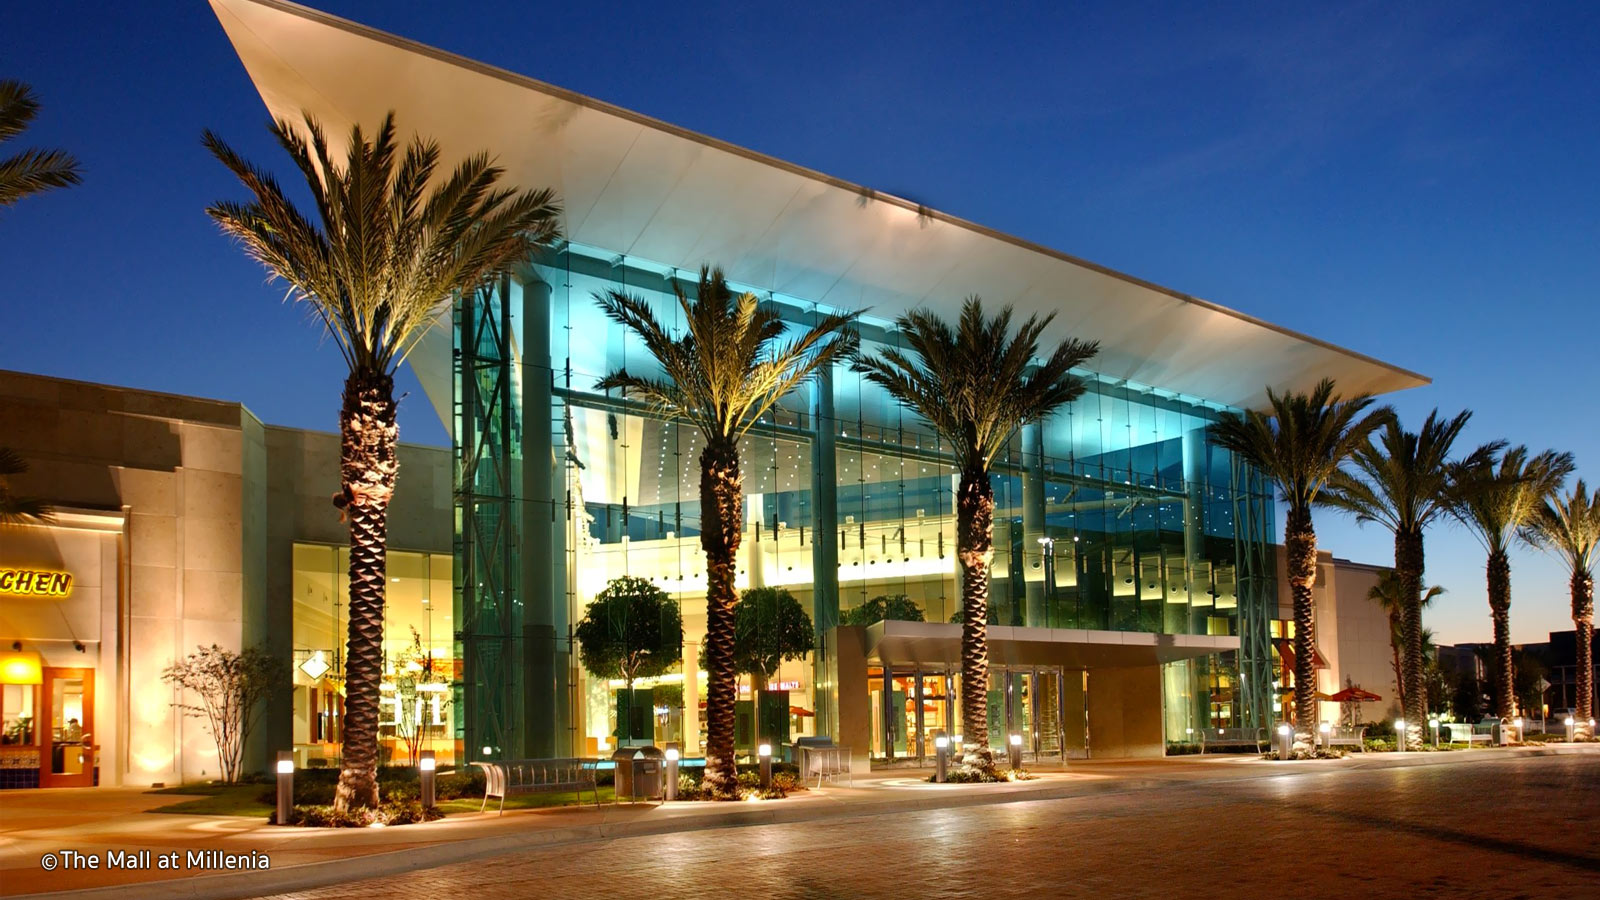 10 Best Shopping Malls in Aruba - Aruba's Most Popular Malls and